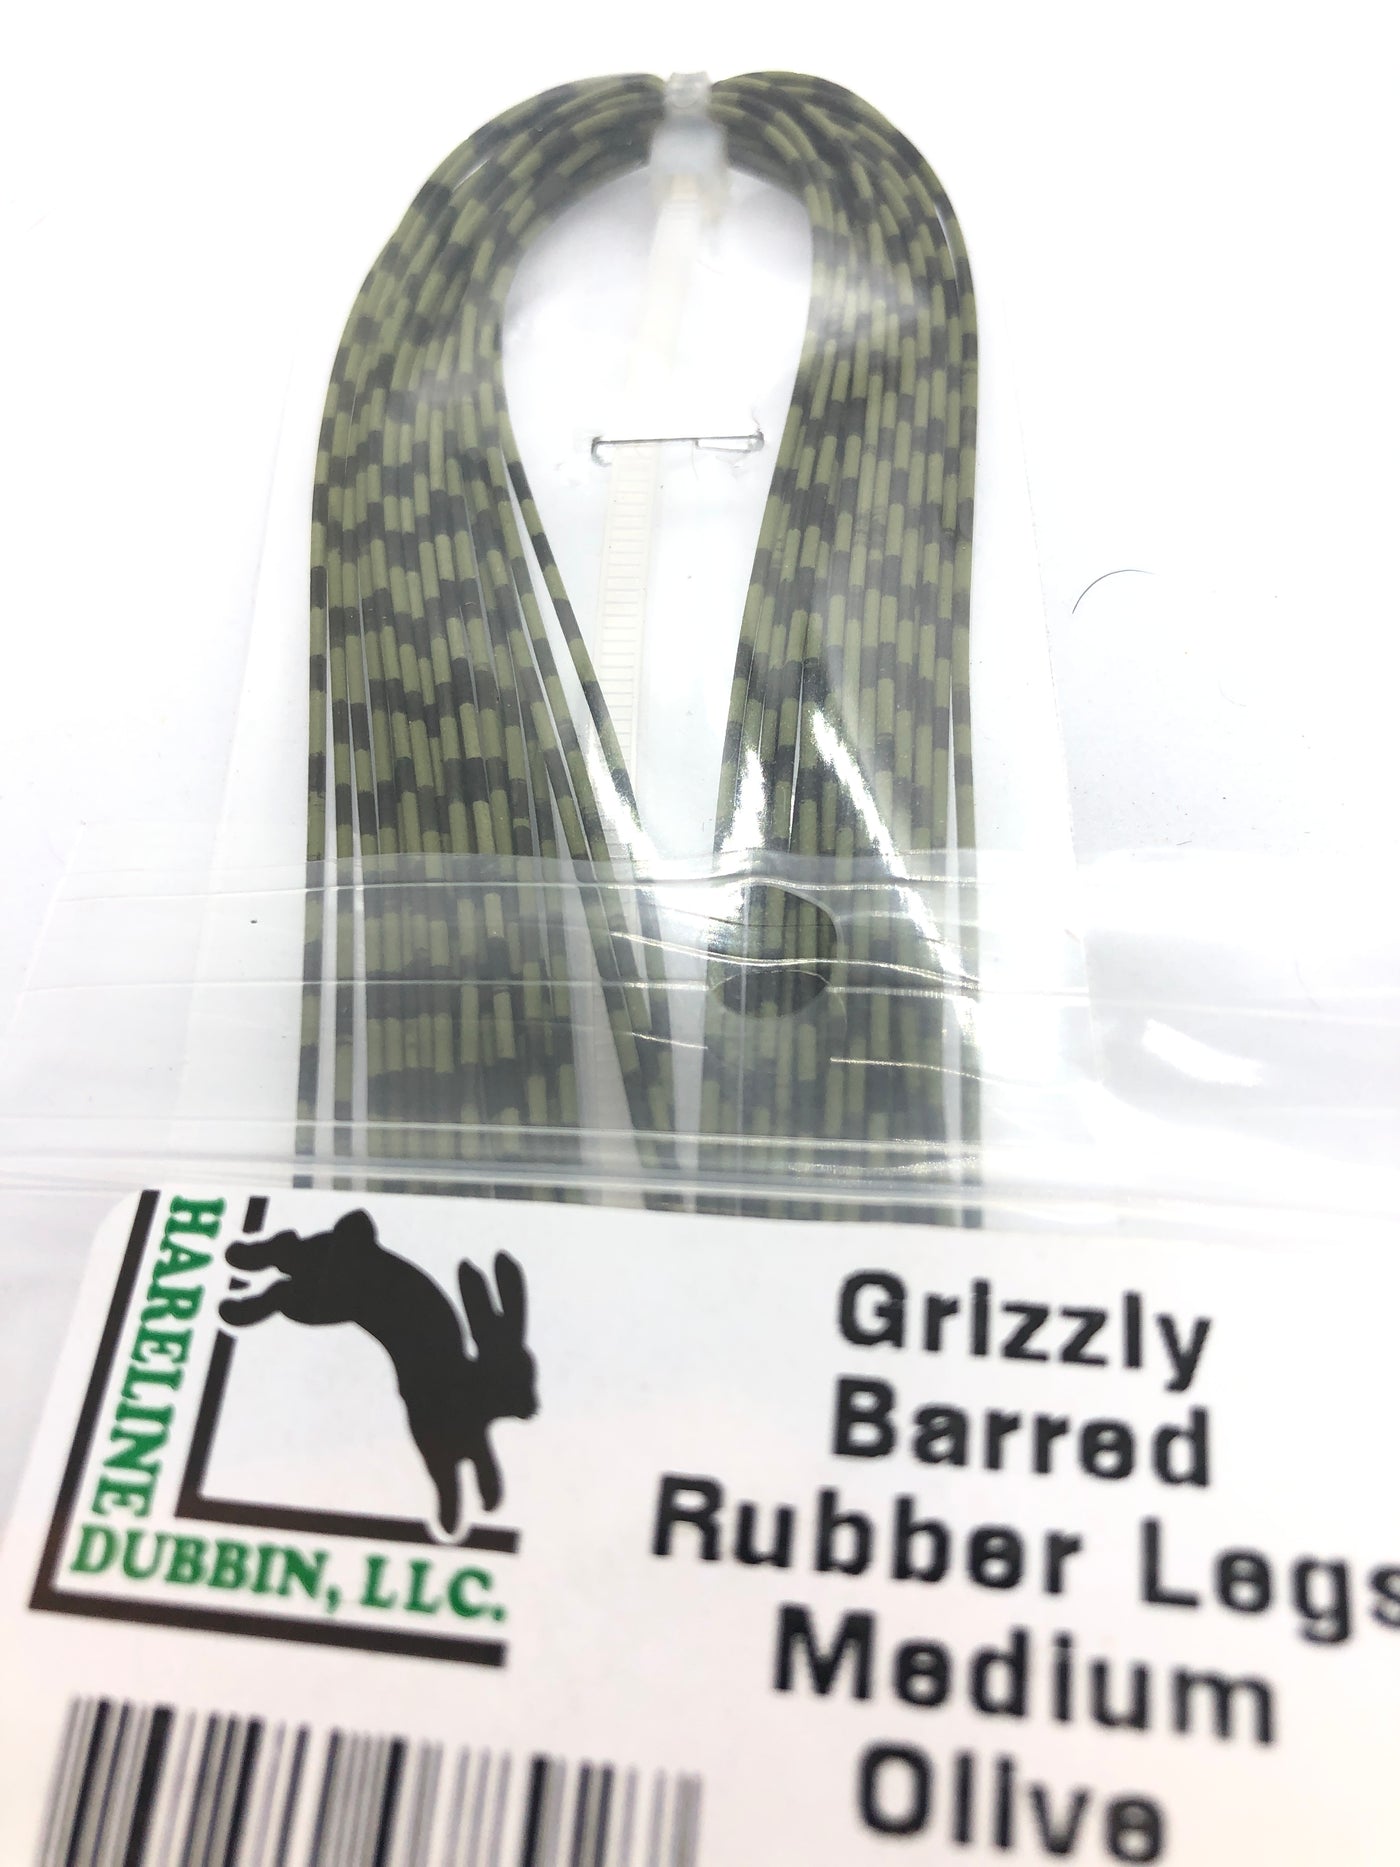 Hareline Dubbin Grizzly Barred Rubber Legs Medium